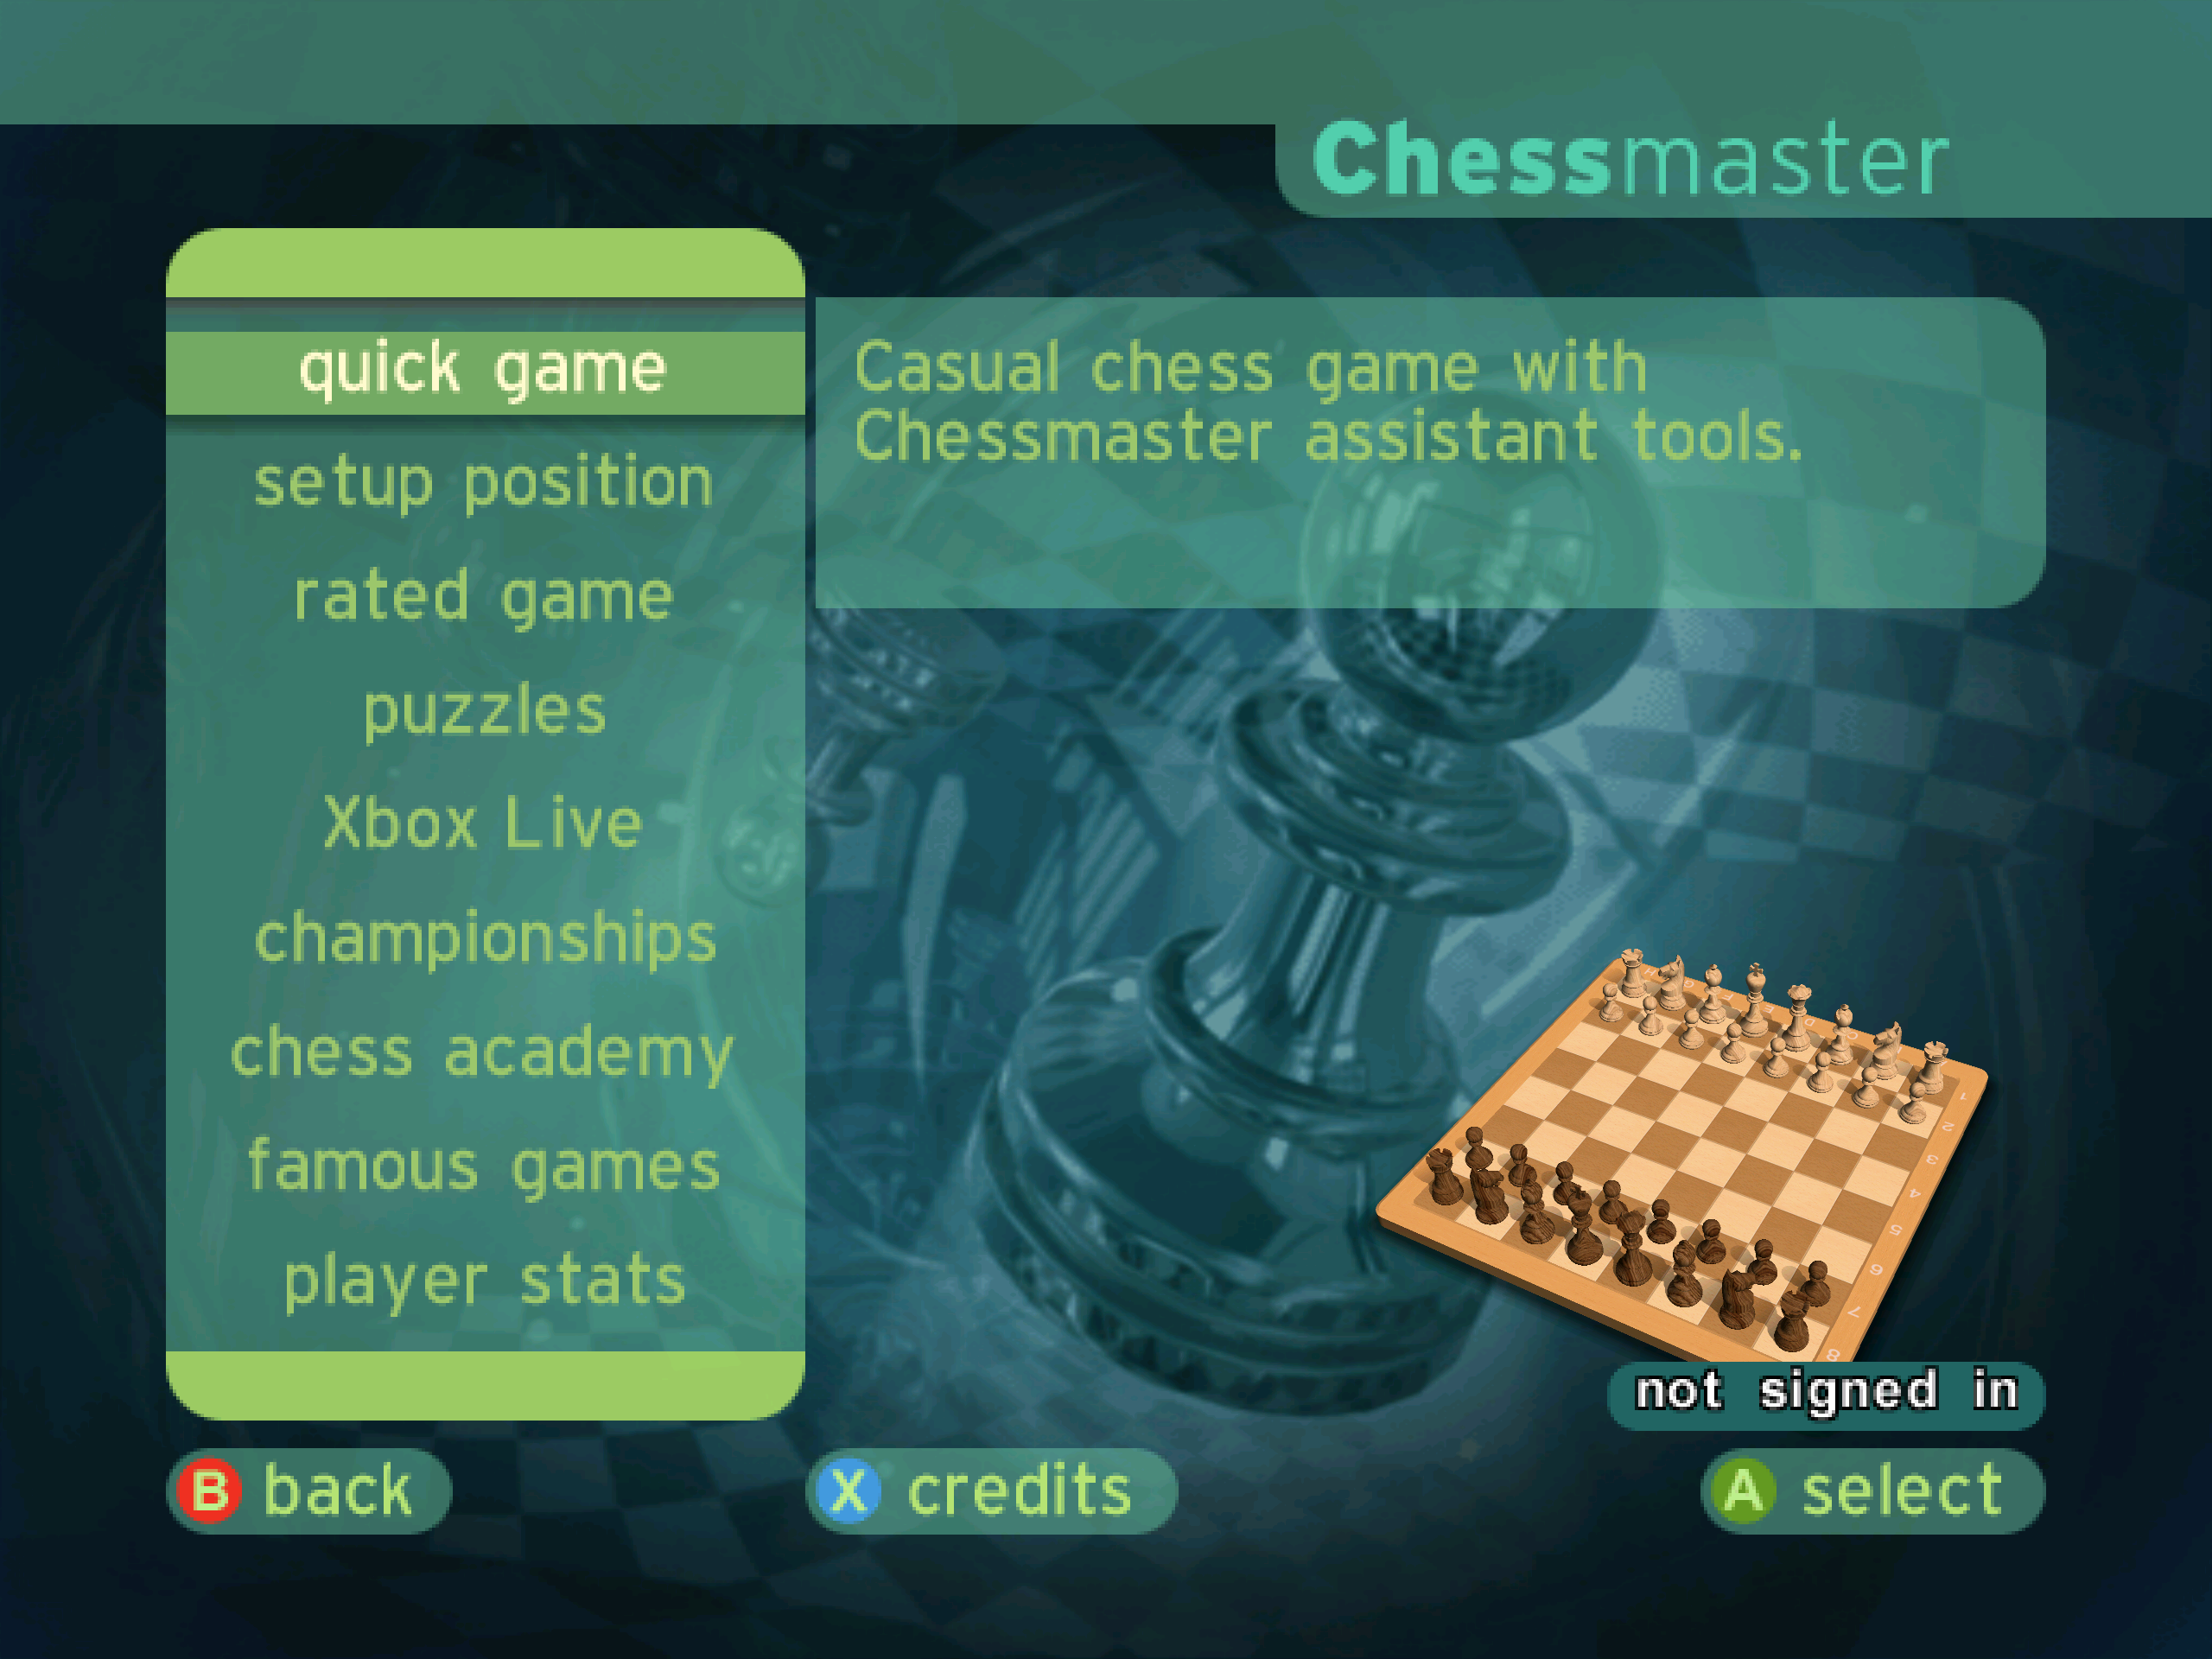 Chessmaster Live Xbox Live Gameplay - Chess (HD) 